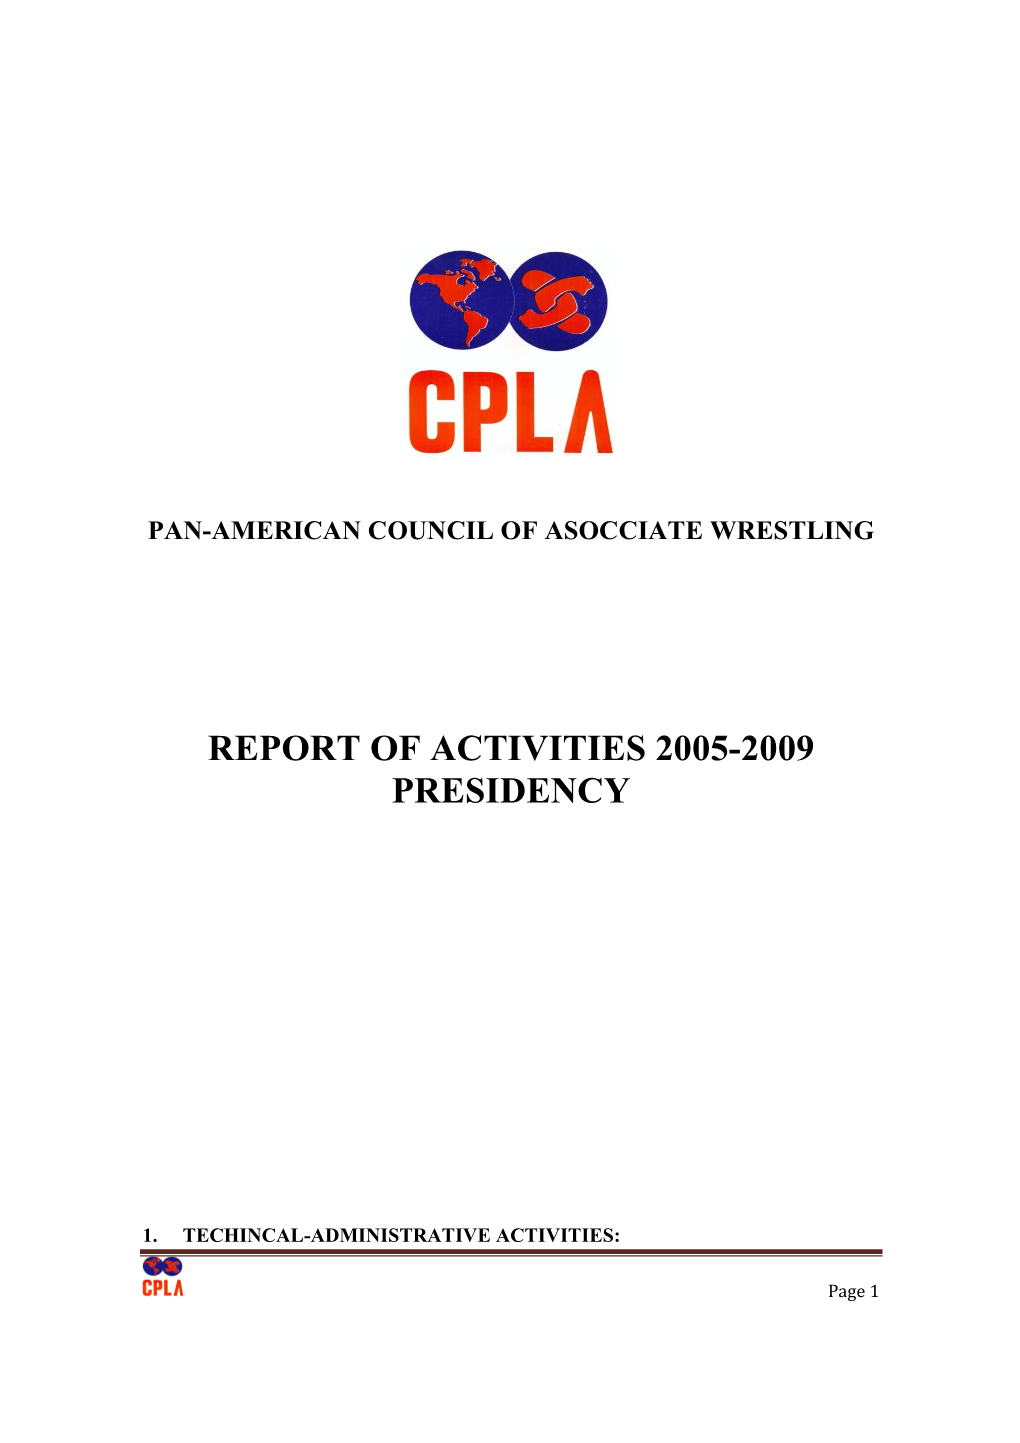 CPLA Activity Report